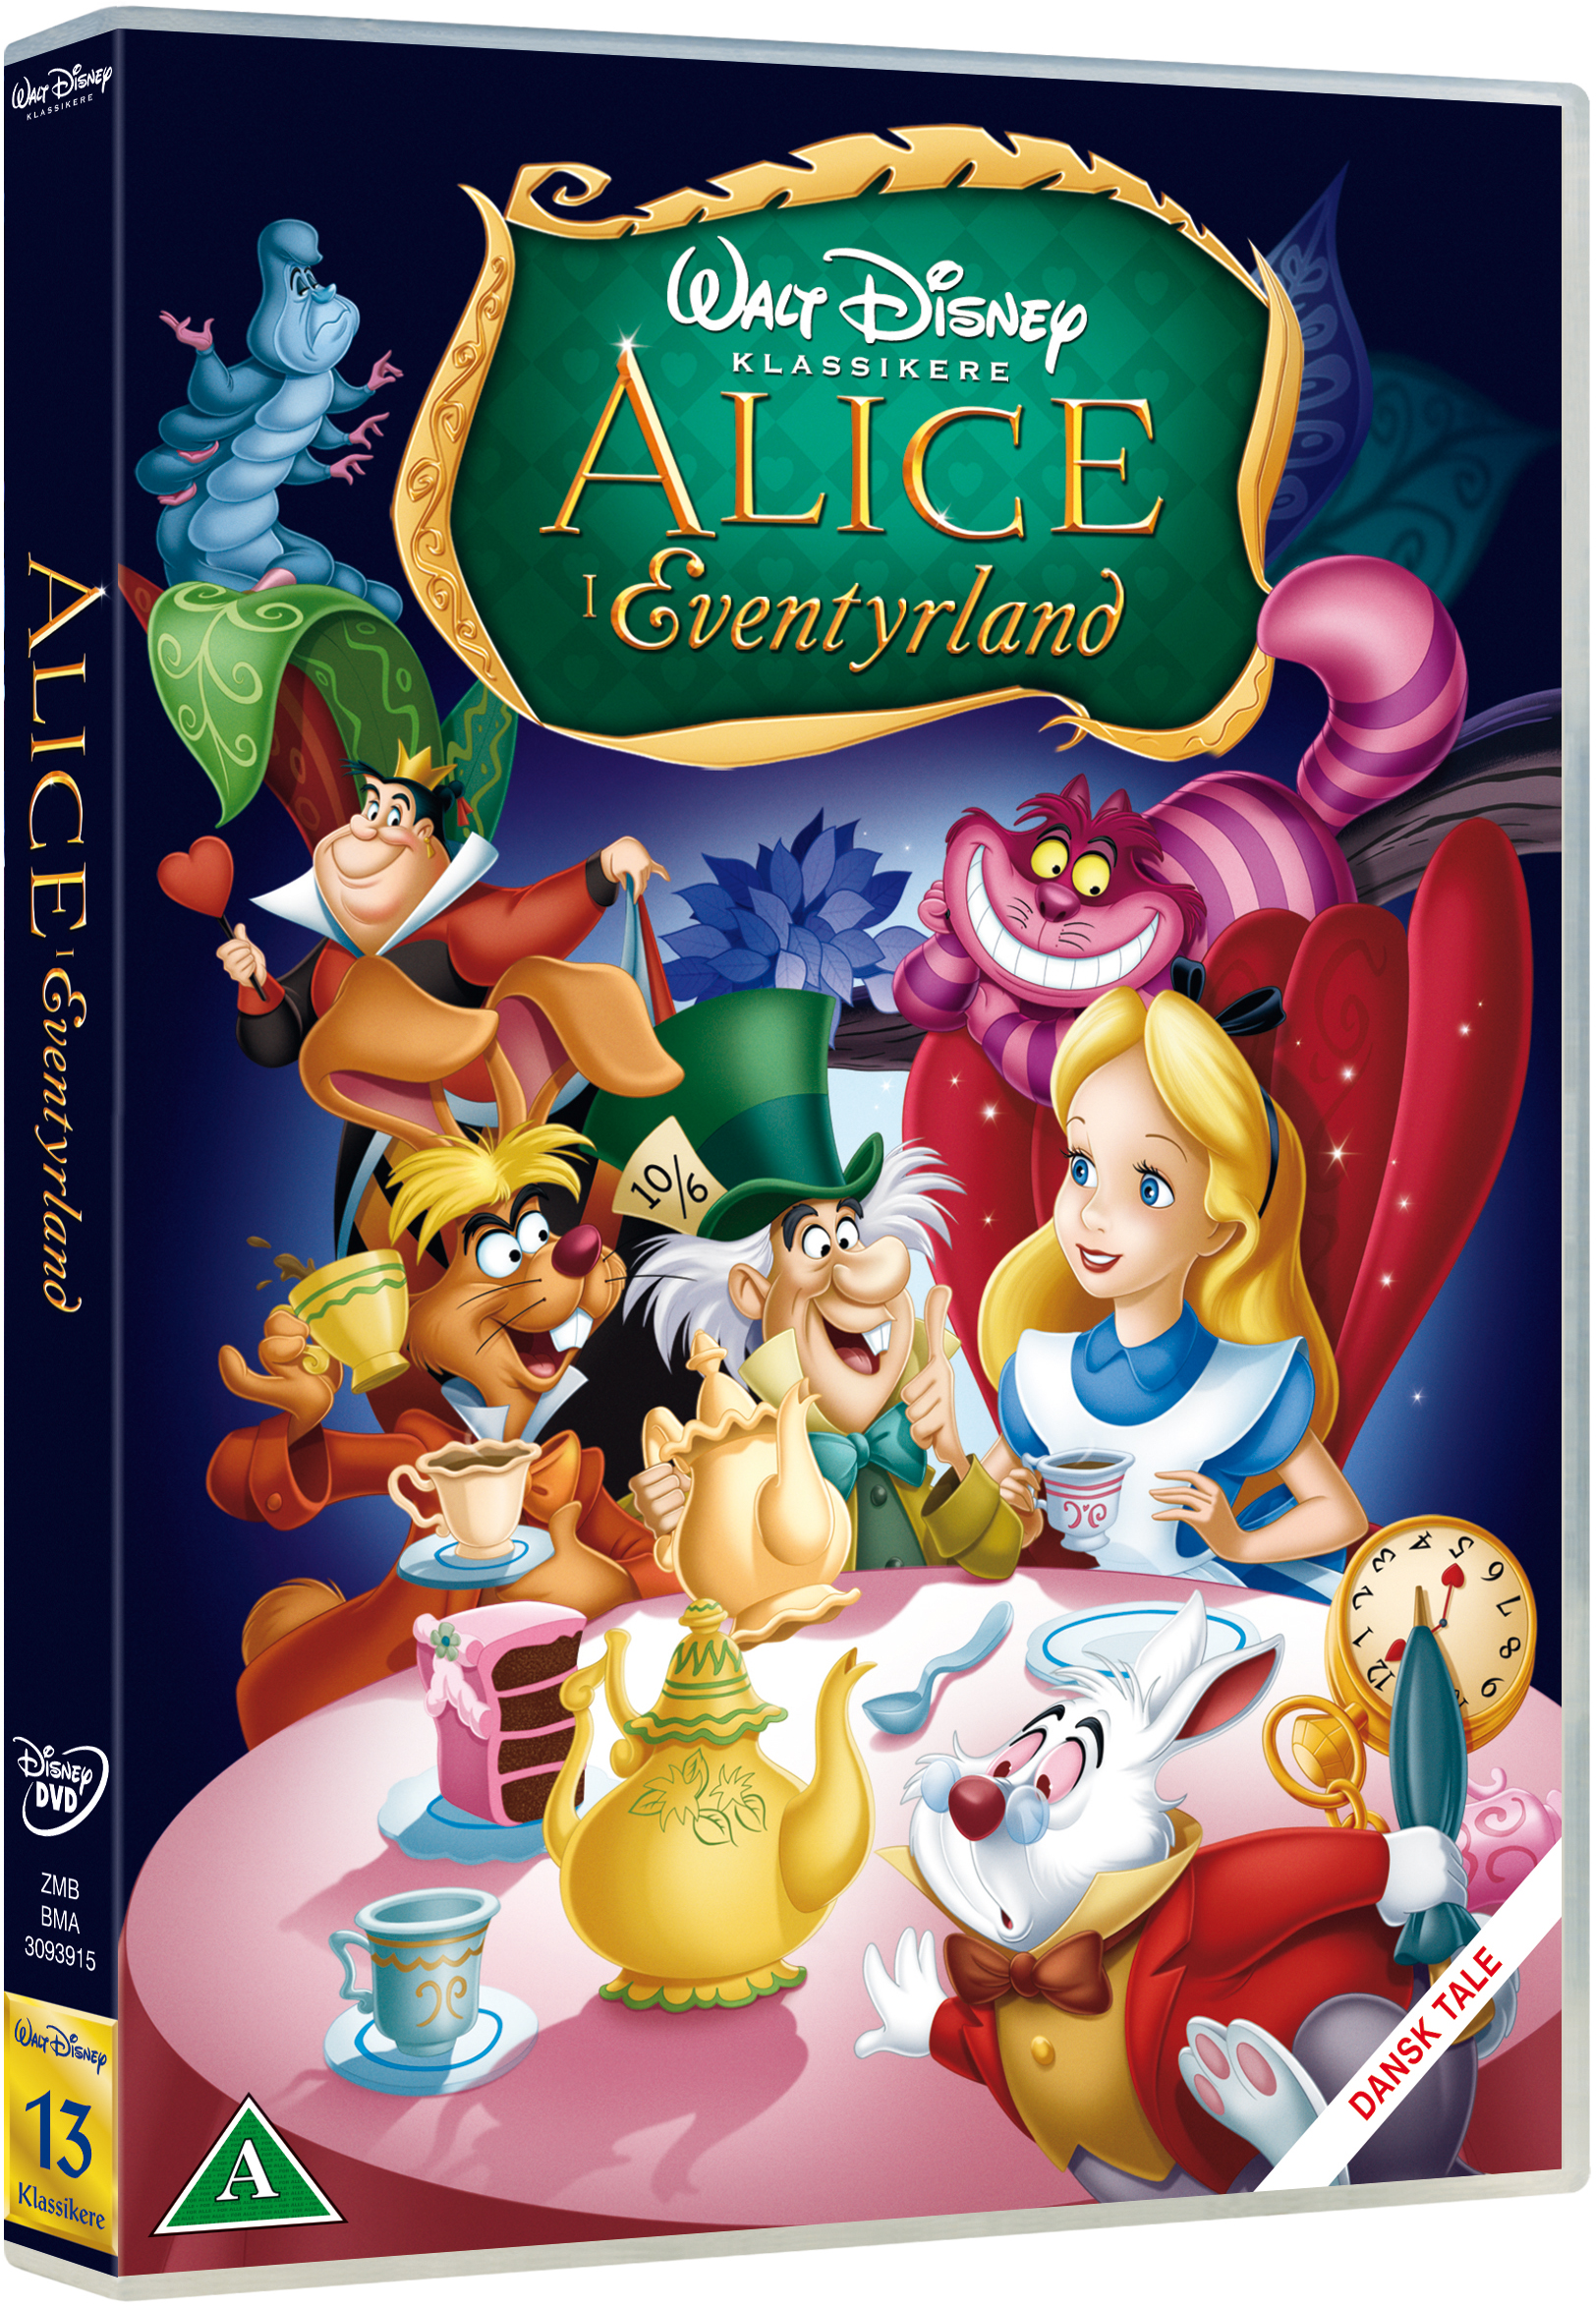 Disneys Alice in Wonderland - 60th Anniversary Edition - DVD